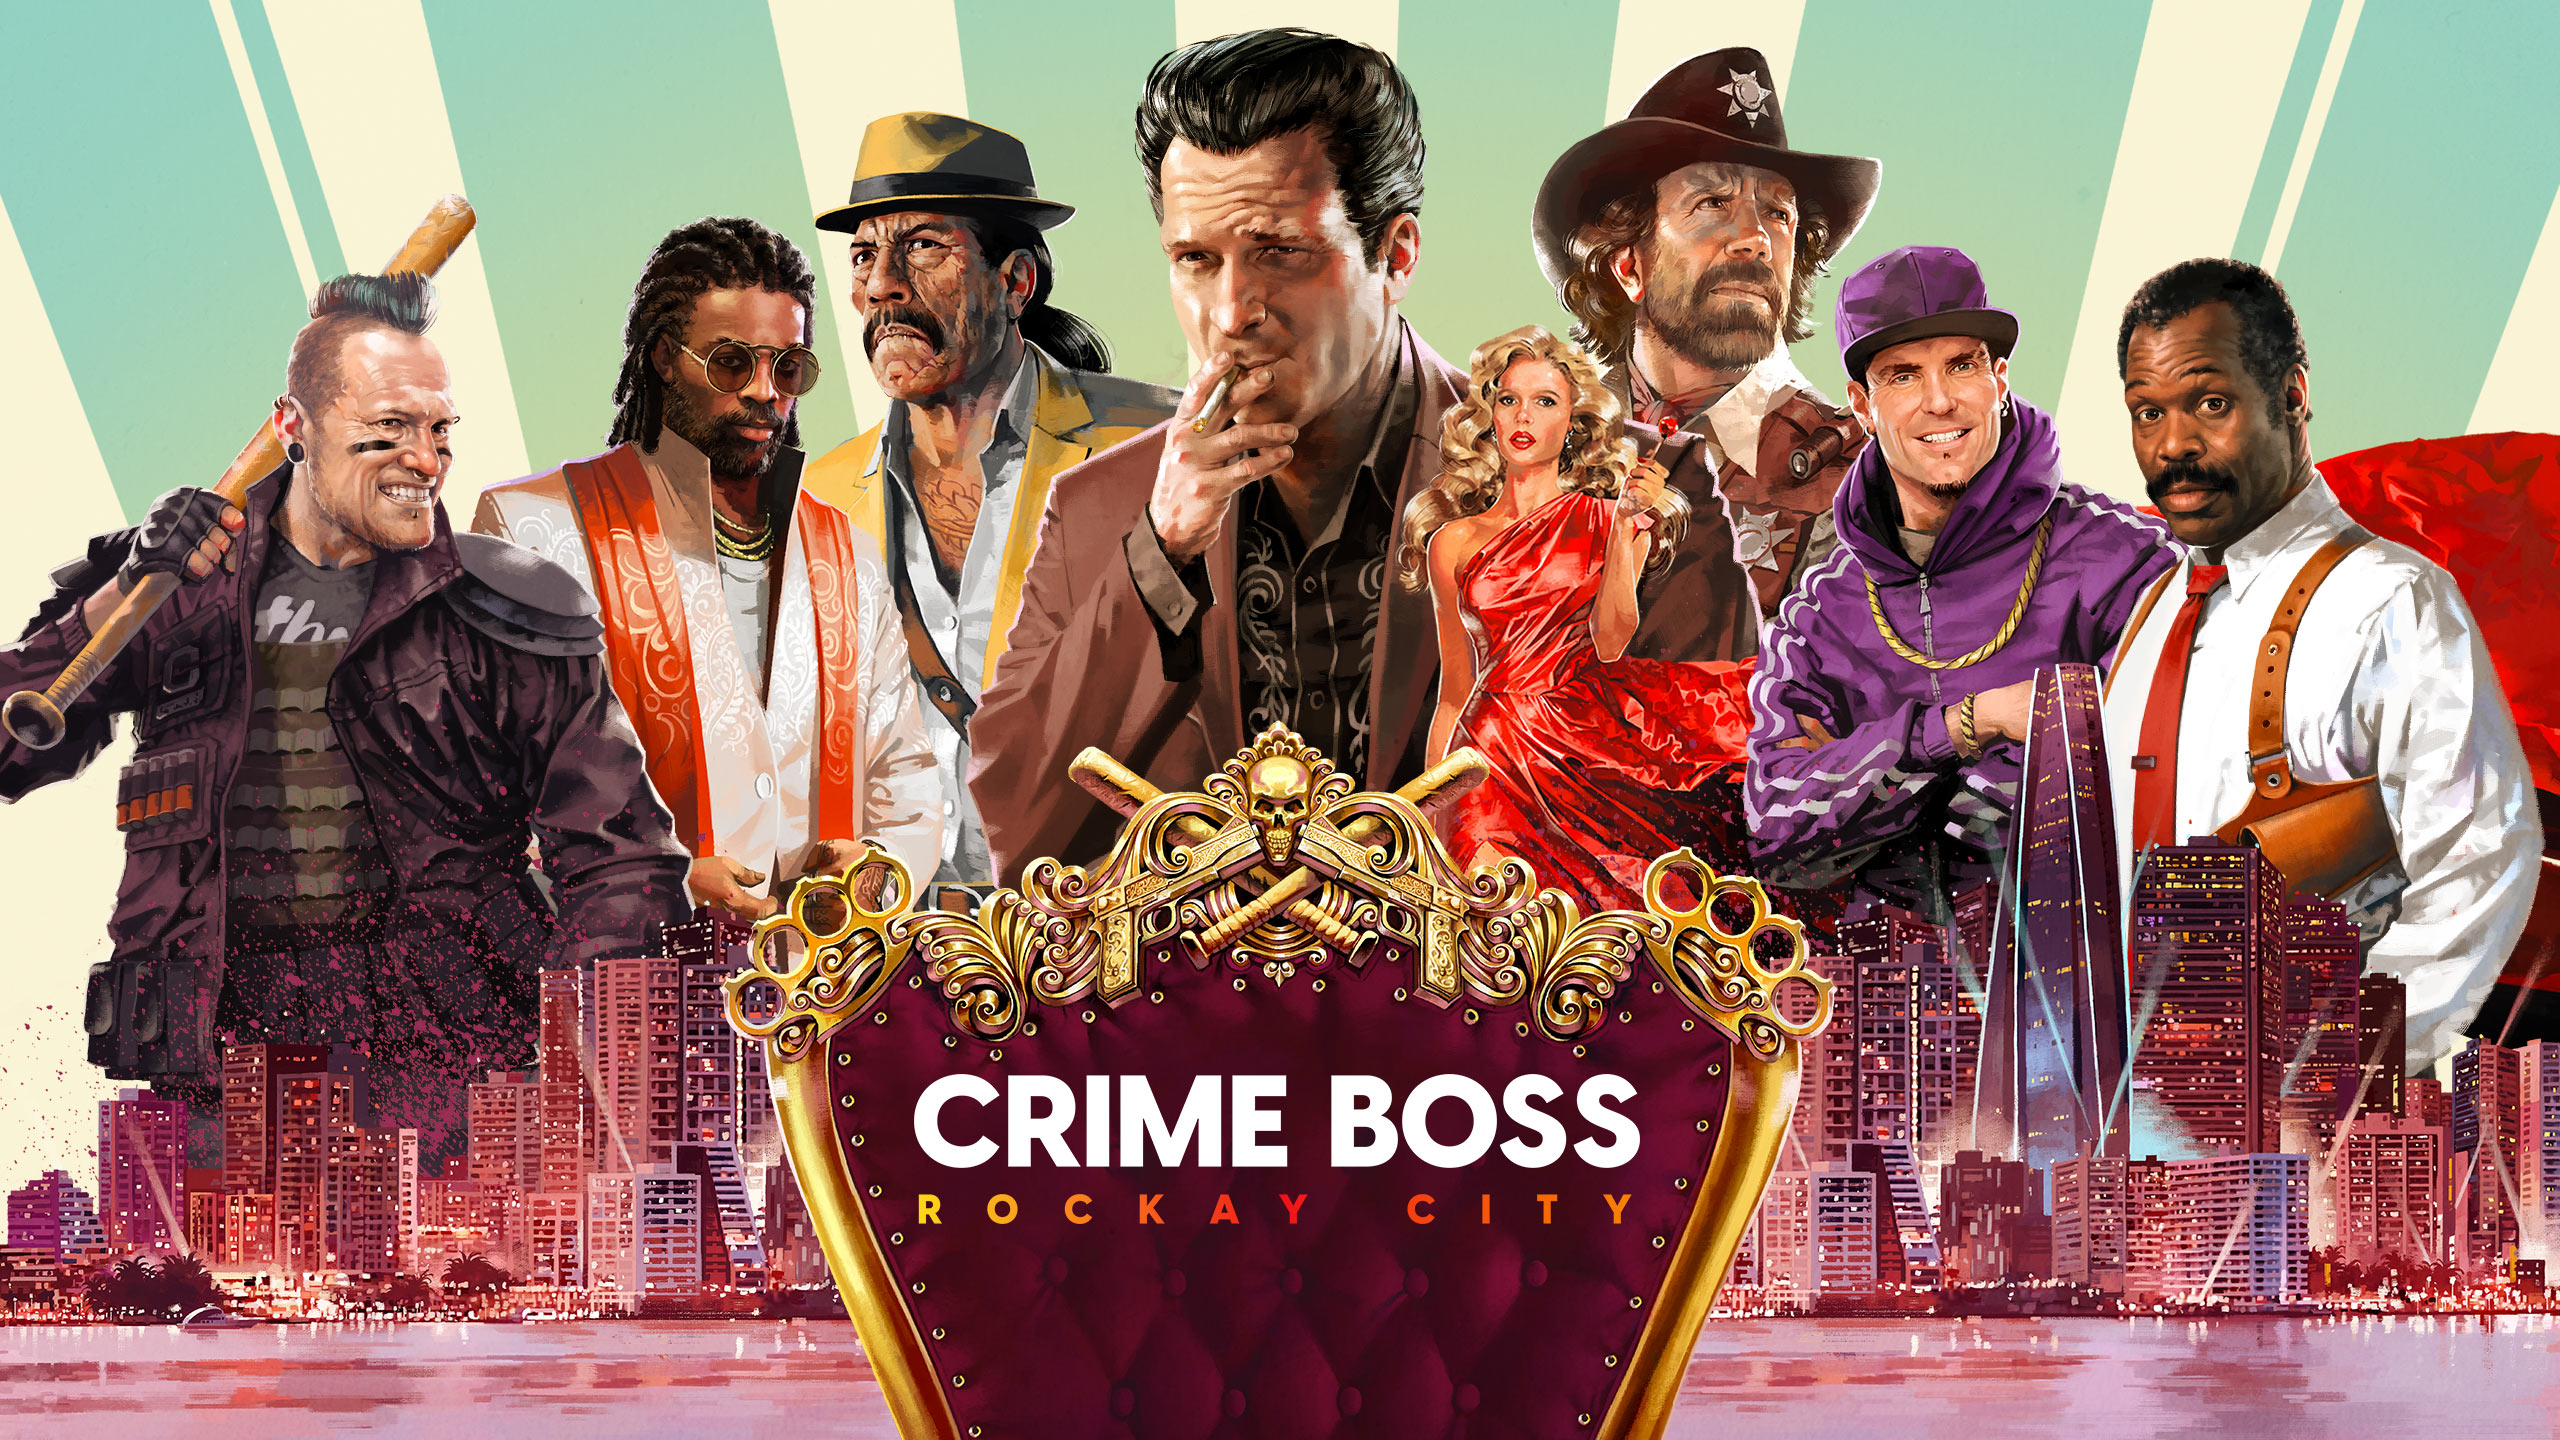 Efter Kingdom Hearts: Crime Boss: Rockay City udkommer på Steam den 18. juni.